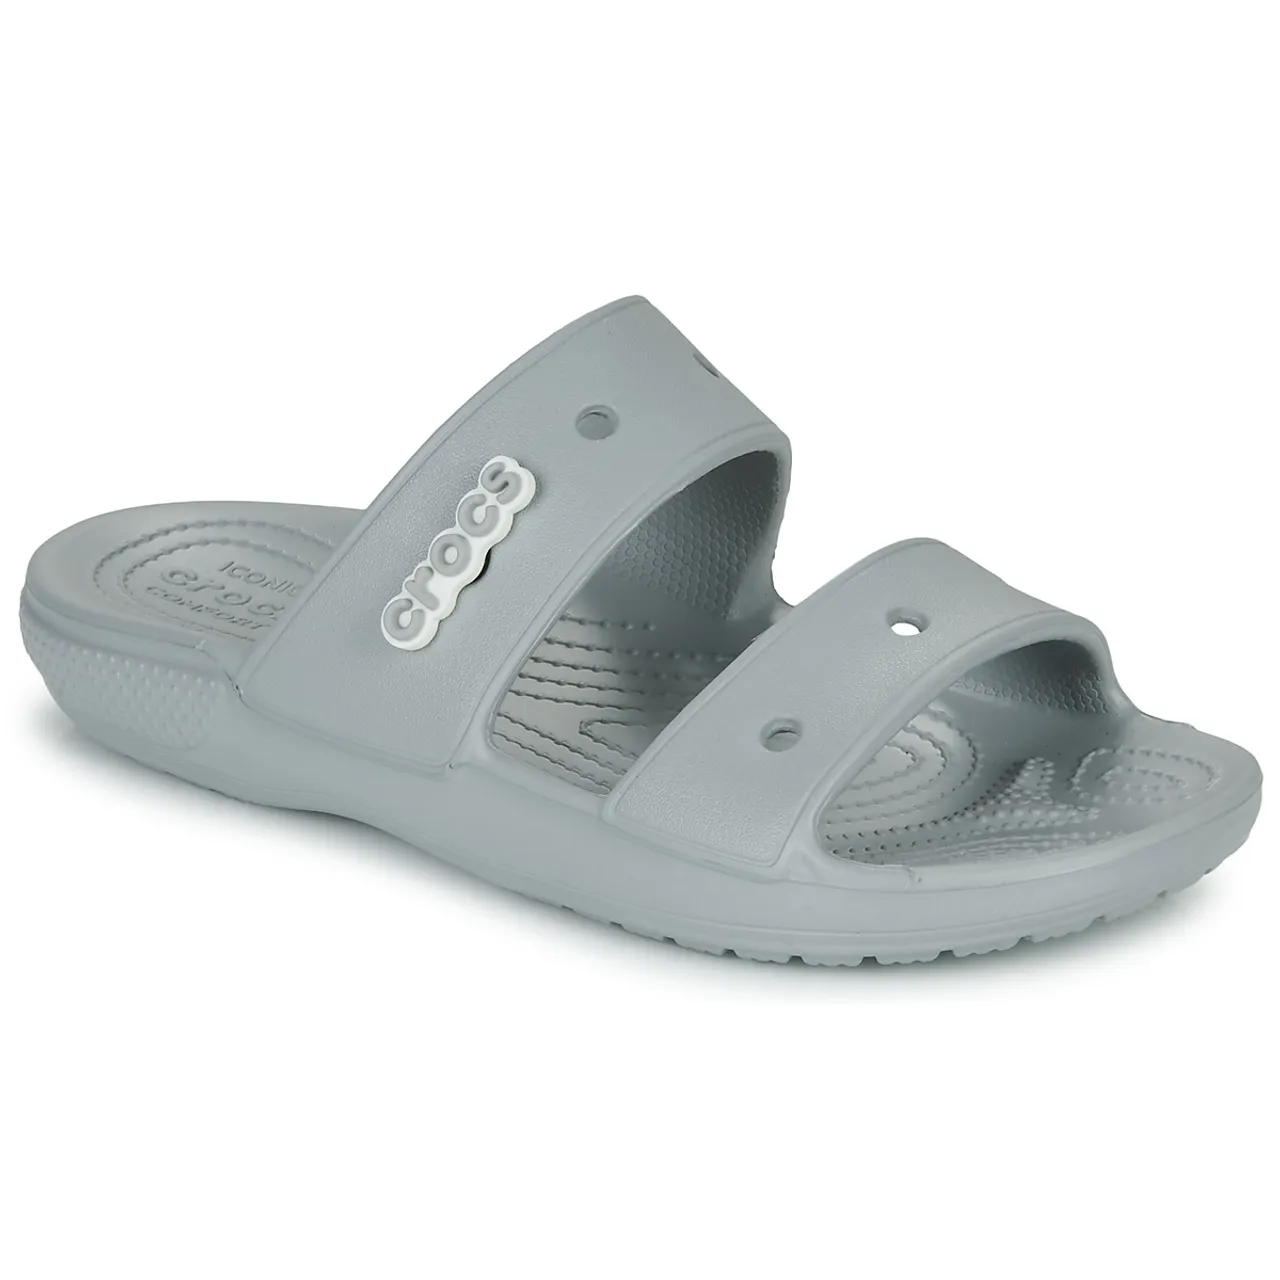 Crocs  Classic Crocs Sandal  women's Mules / Casual Shoes in Grey